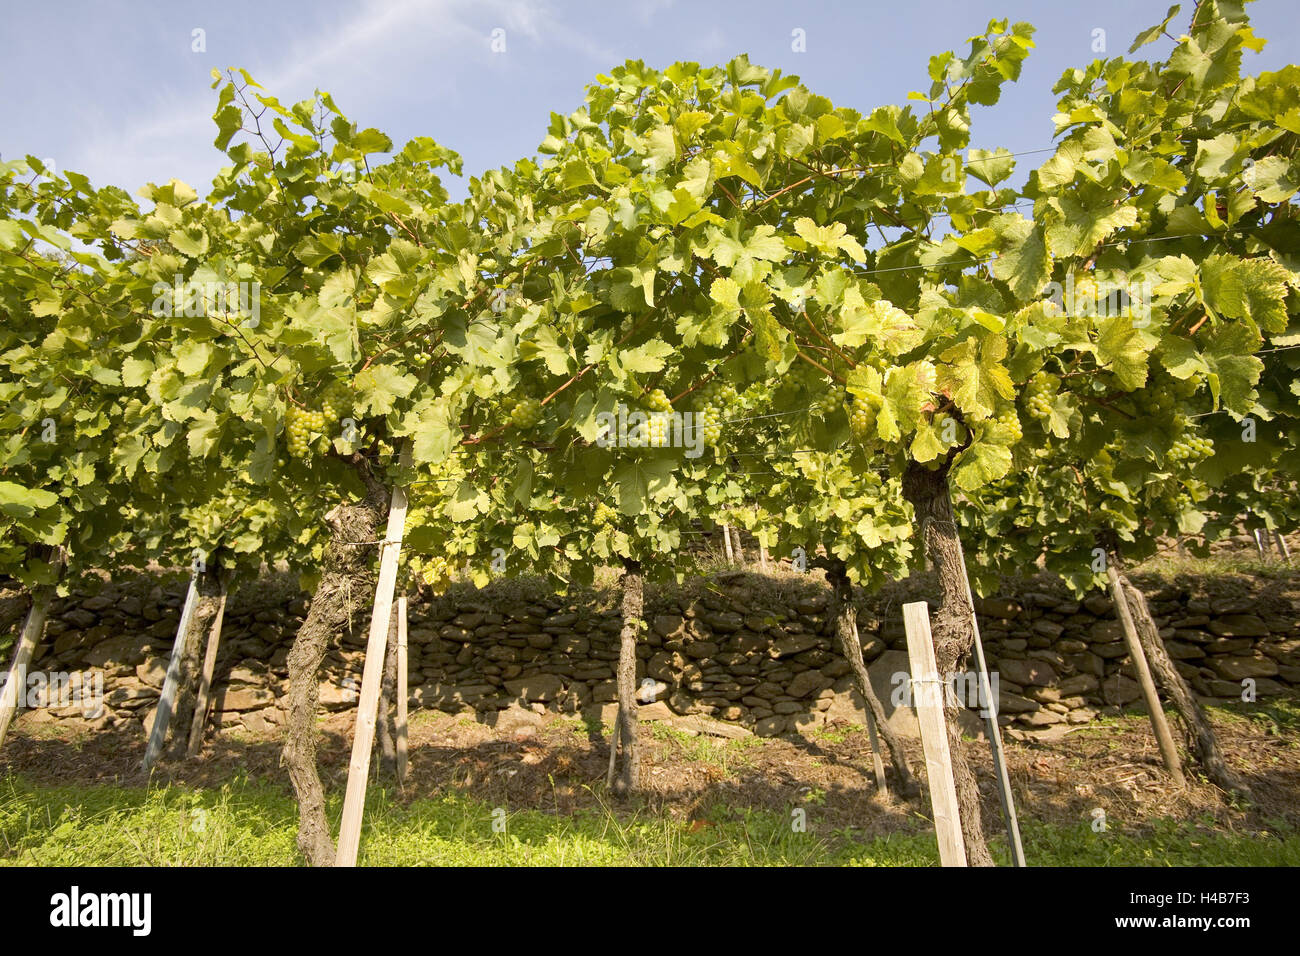 Wine-growing region of Wachau, Stock Photo